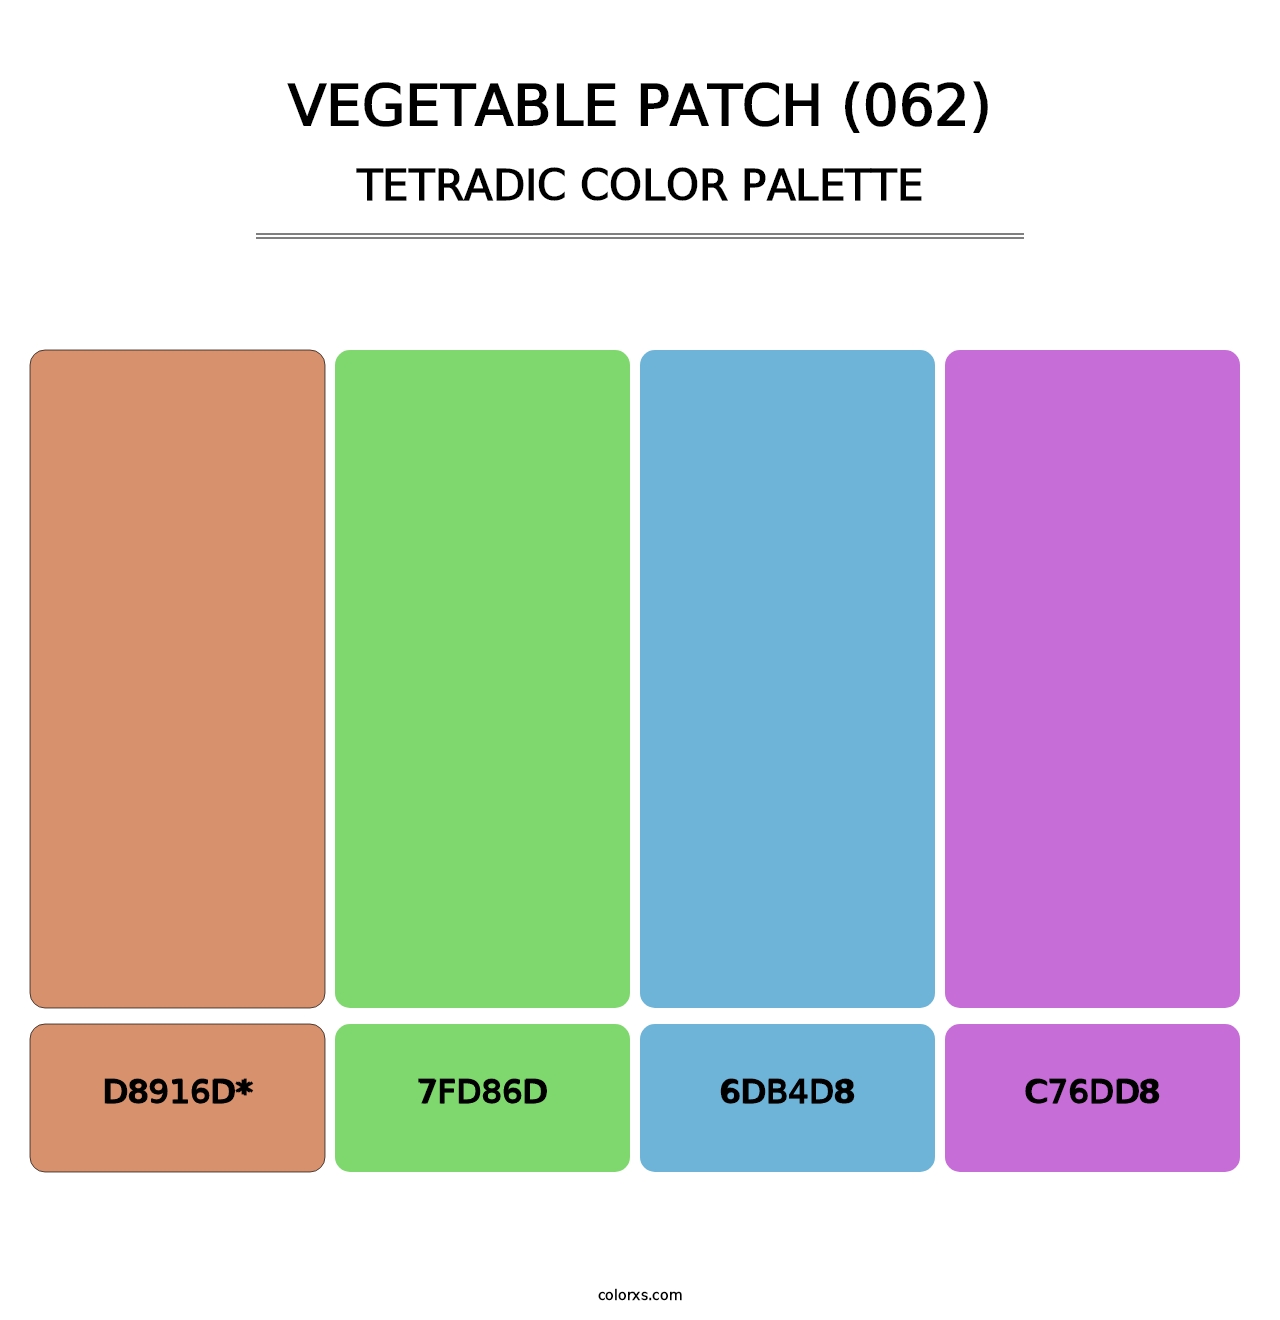 Vegetable Patch (062) - Tetradic Color Palette